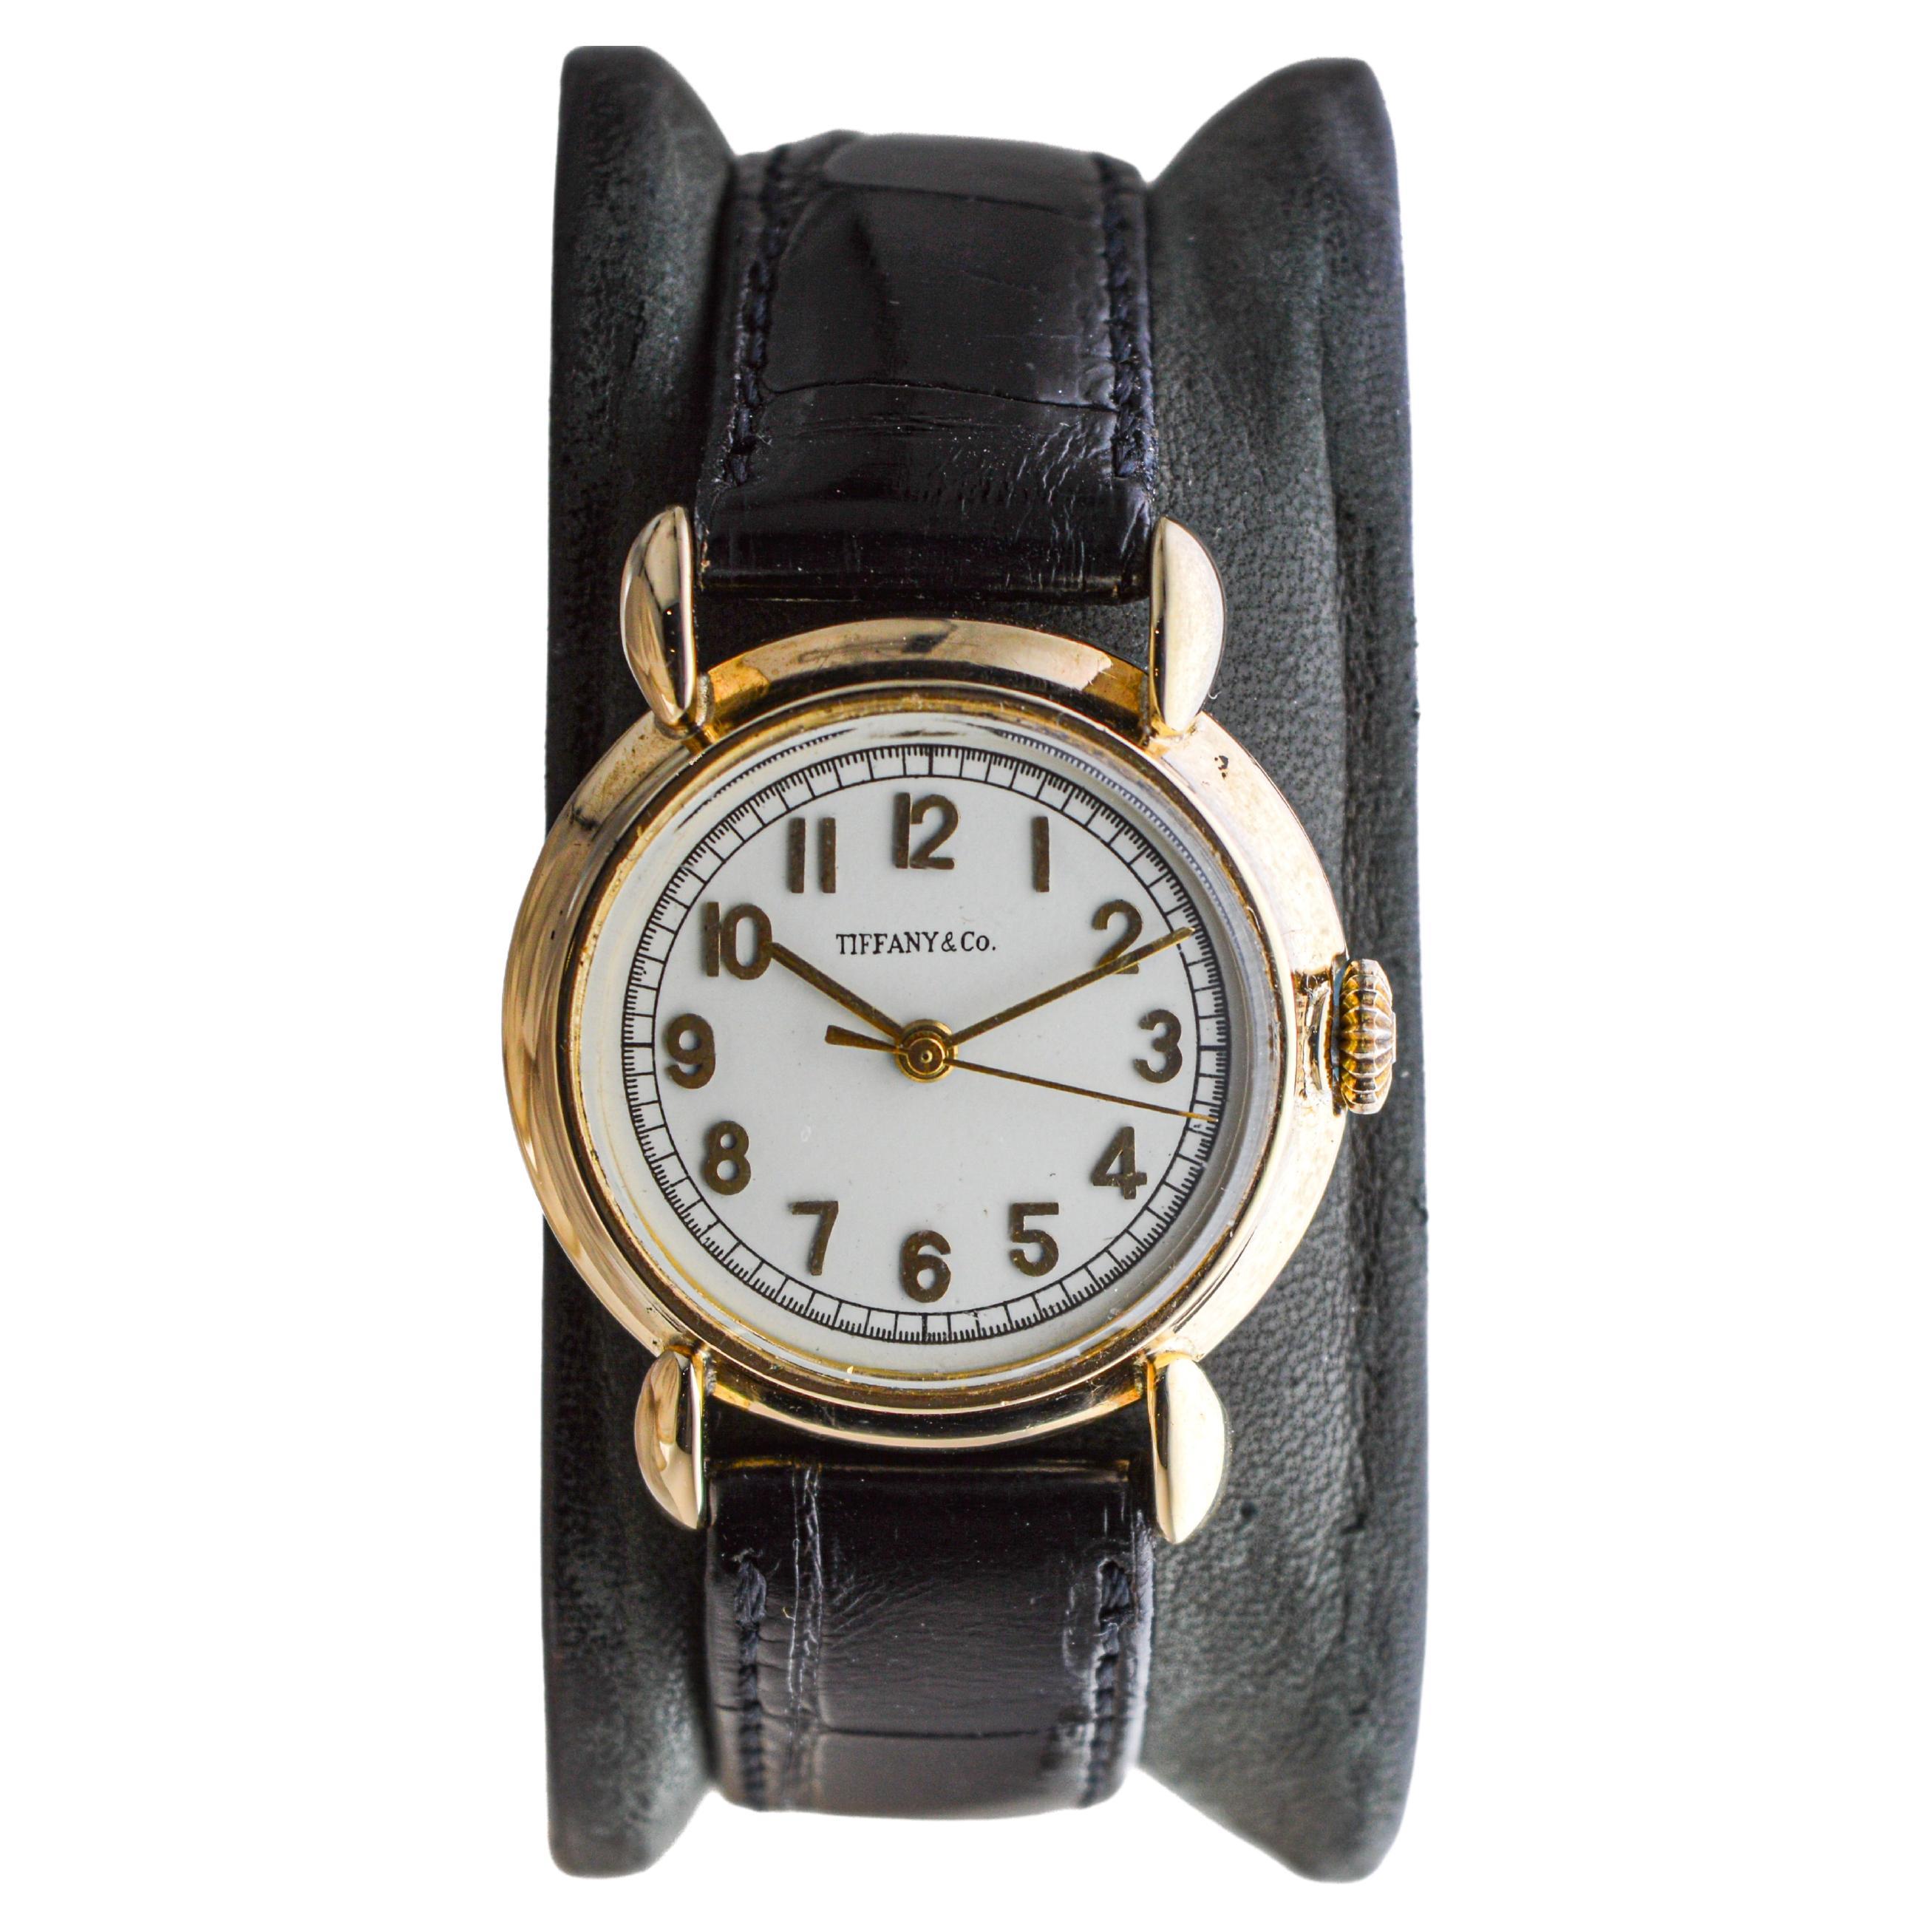 Tiffany & Co. by Schaffhausen International Watch Company Art Deco Style Watch For Sale